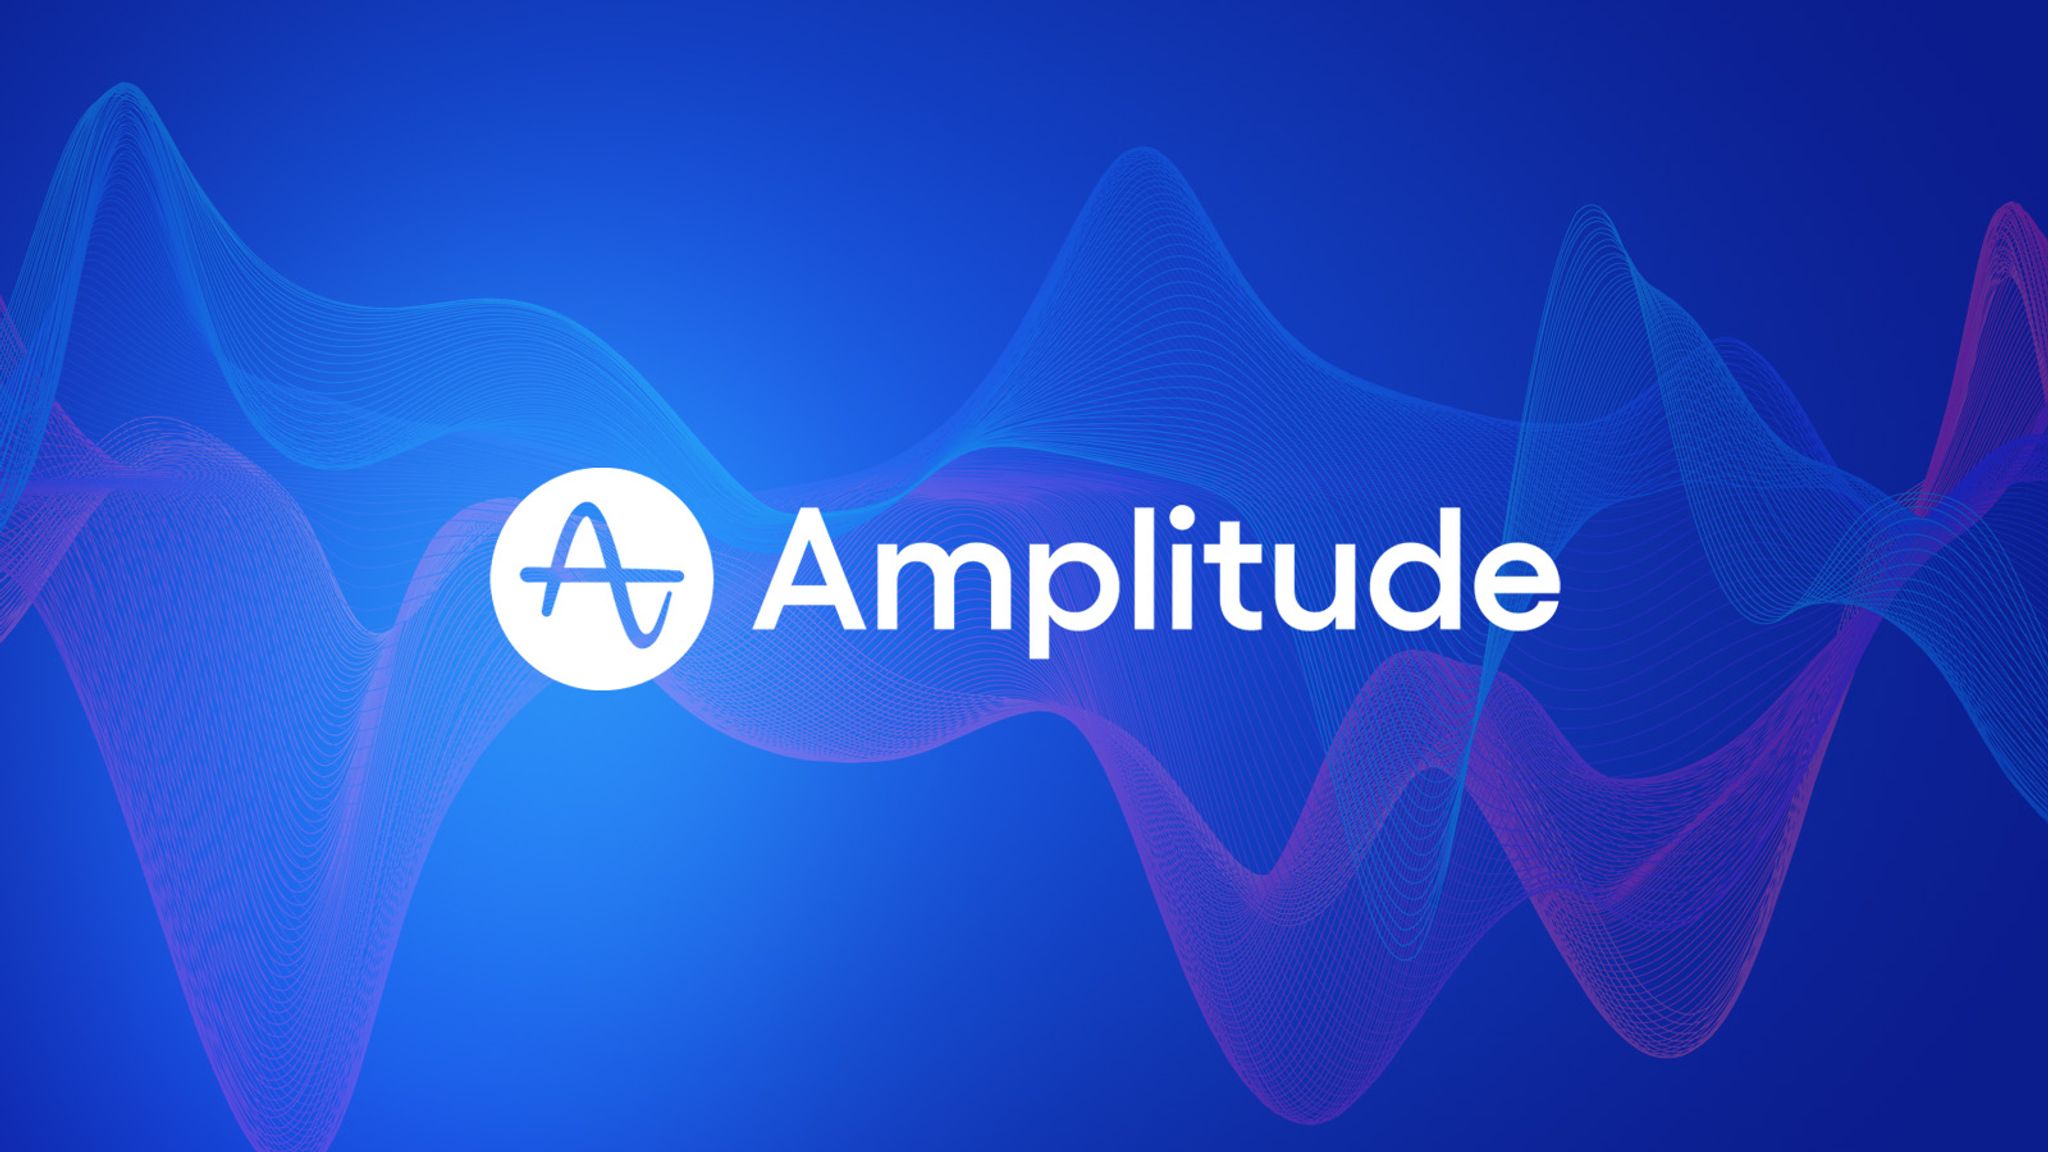 Amplitude logo against a blue background